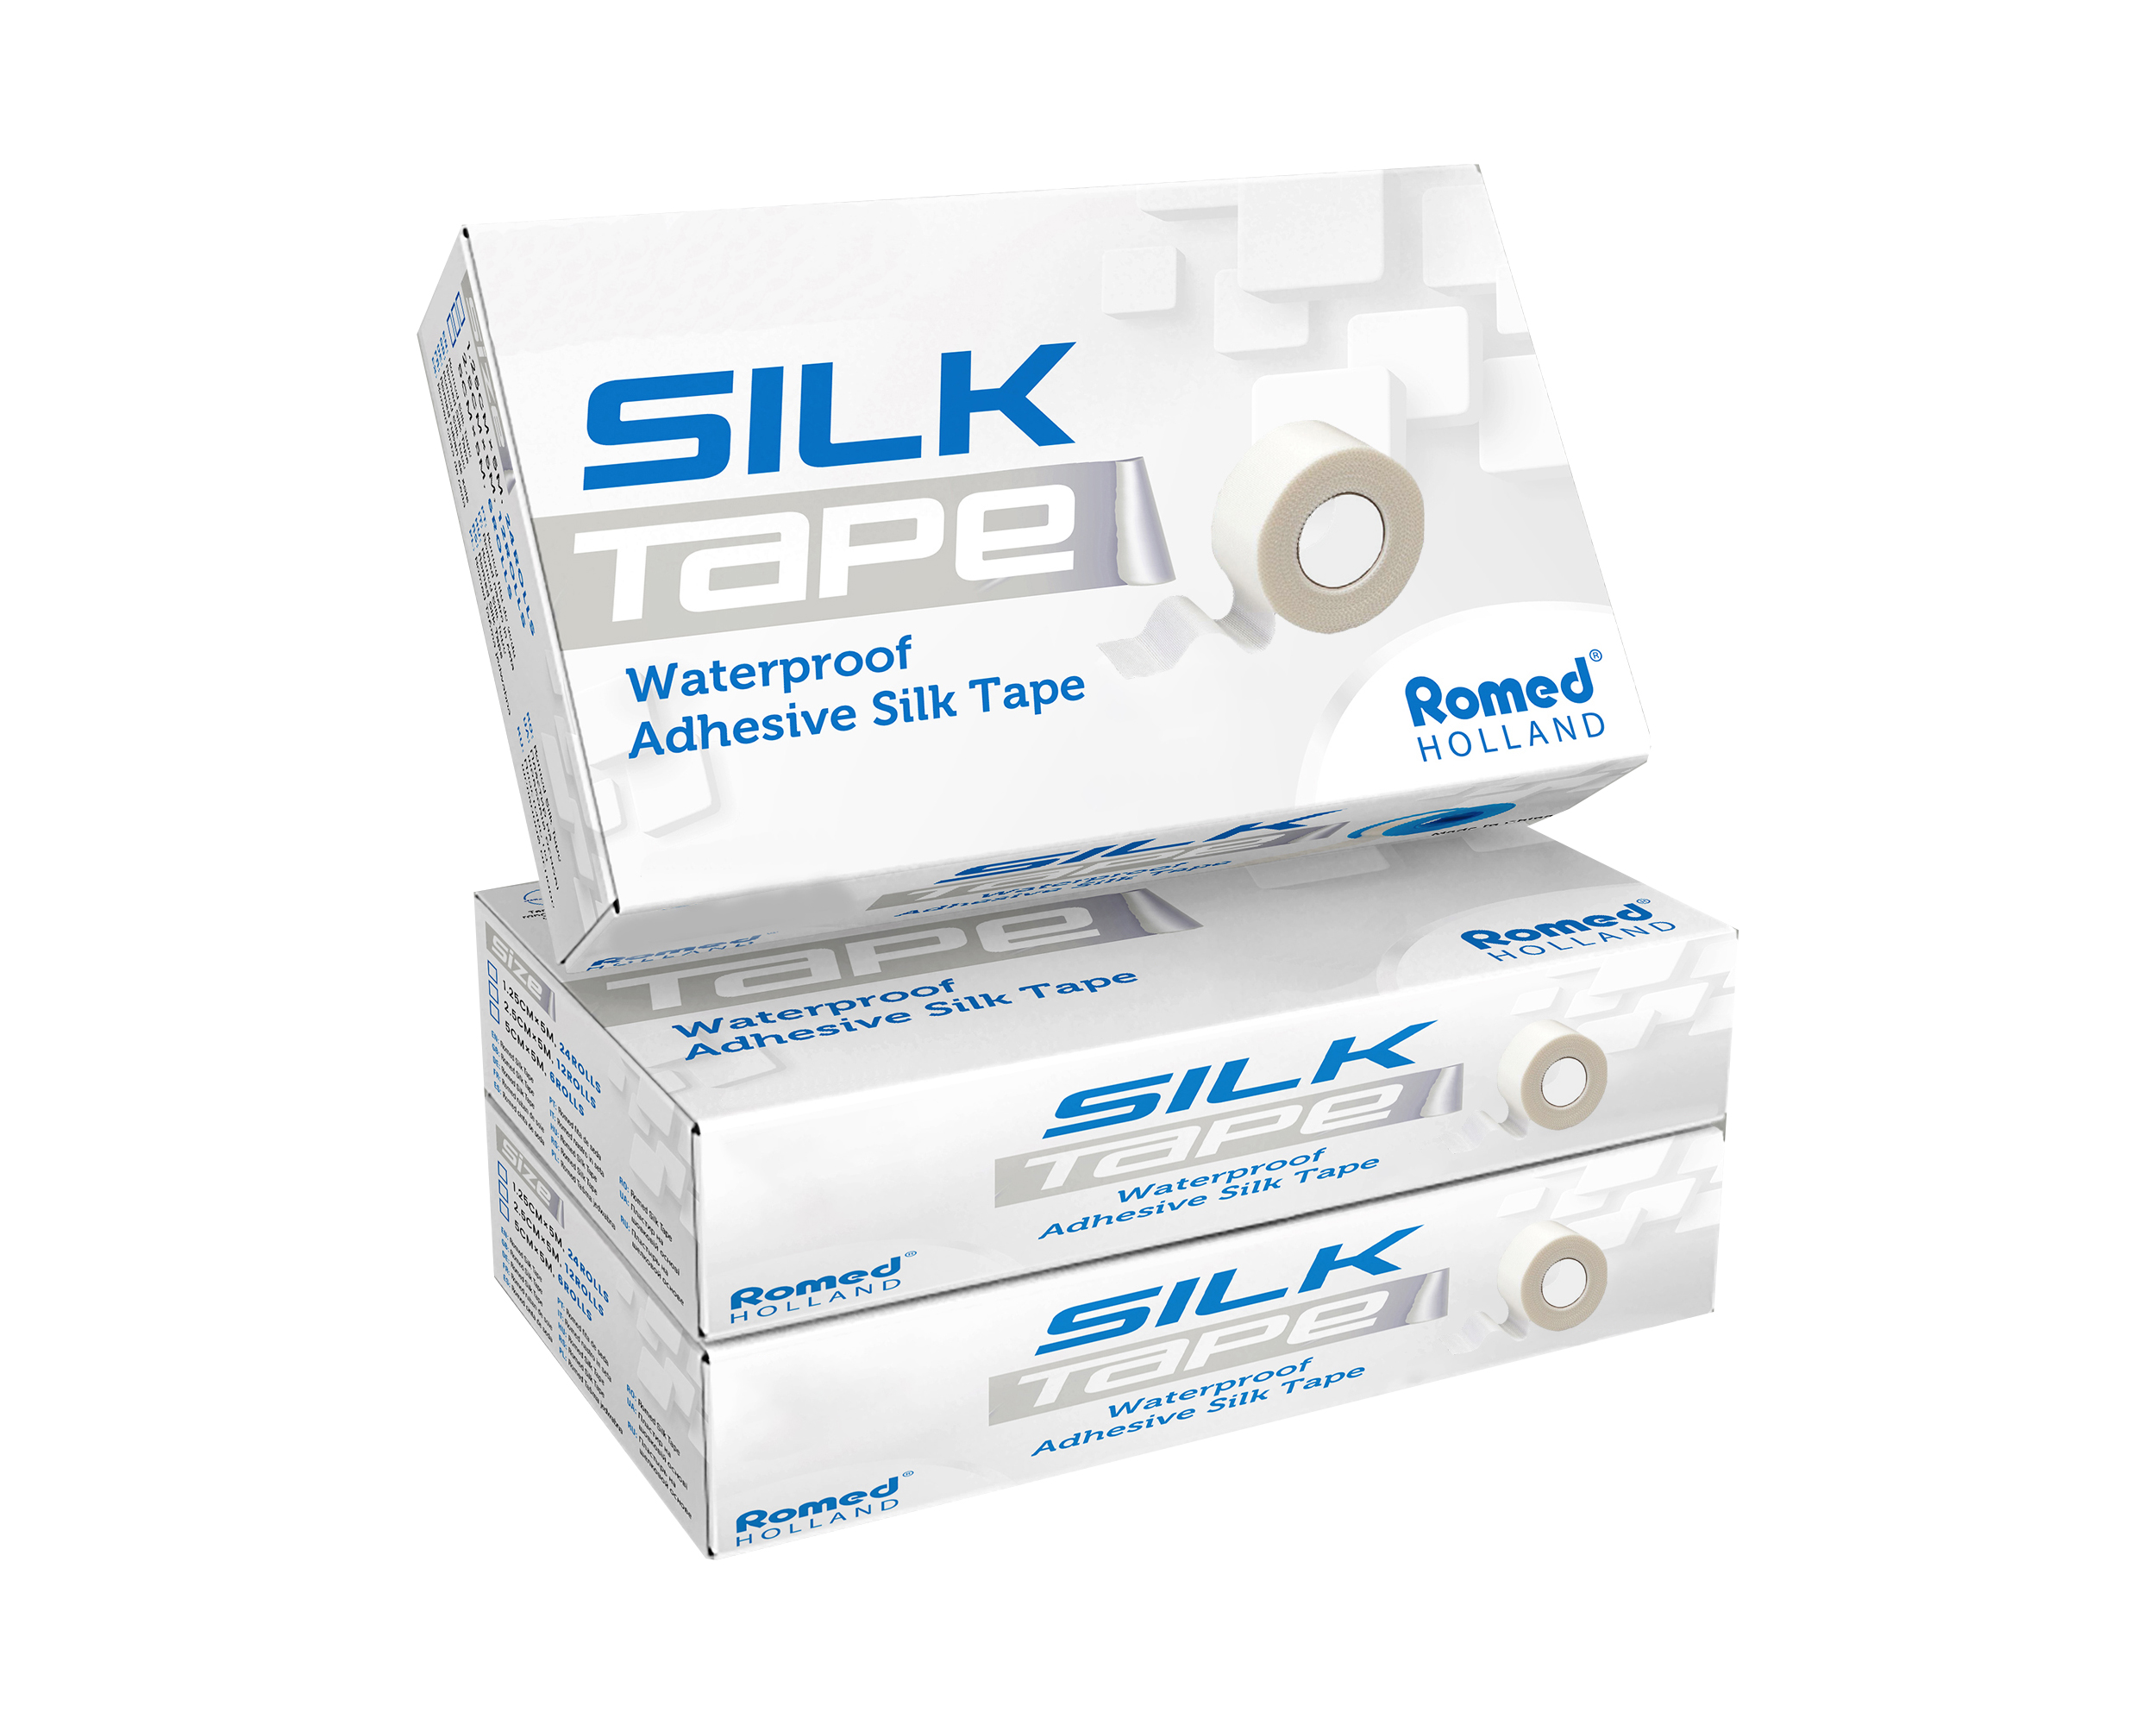 ST-2.5 Romed Adhesive Silk Tape, 2.5cm x 5m, soft easy-tear, waterproof, 12 rolls in an innerbox, 180 rolls per carton.